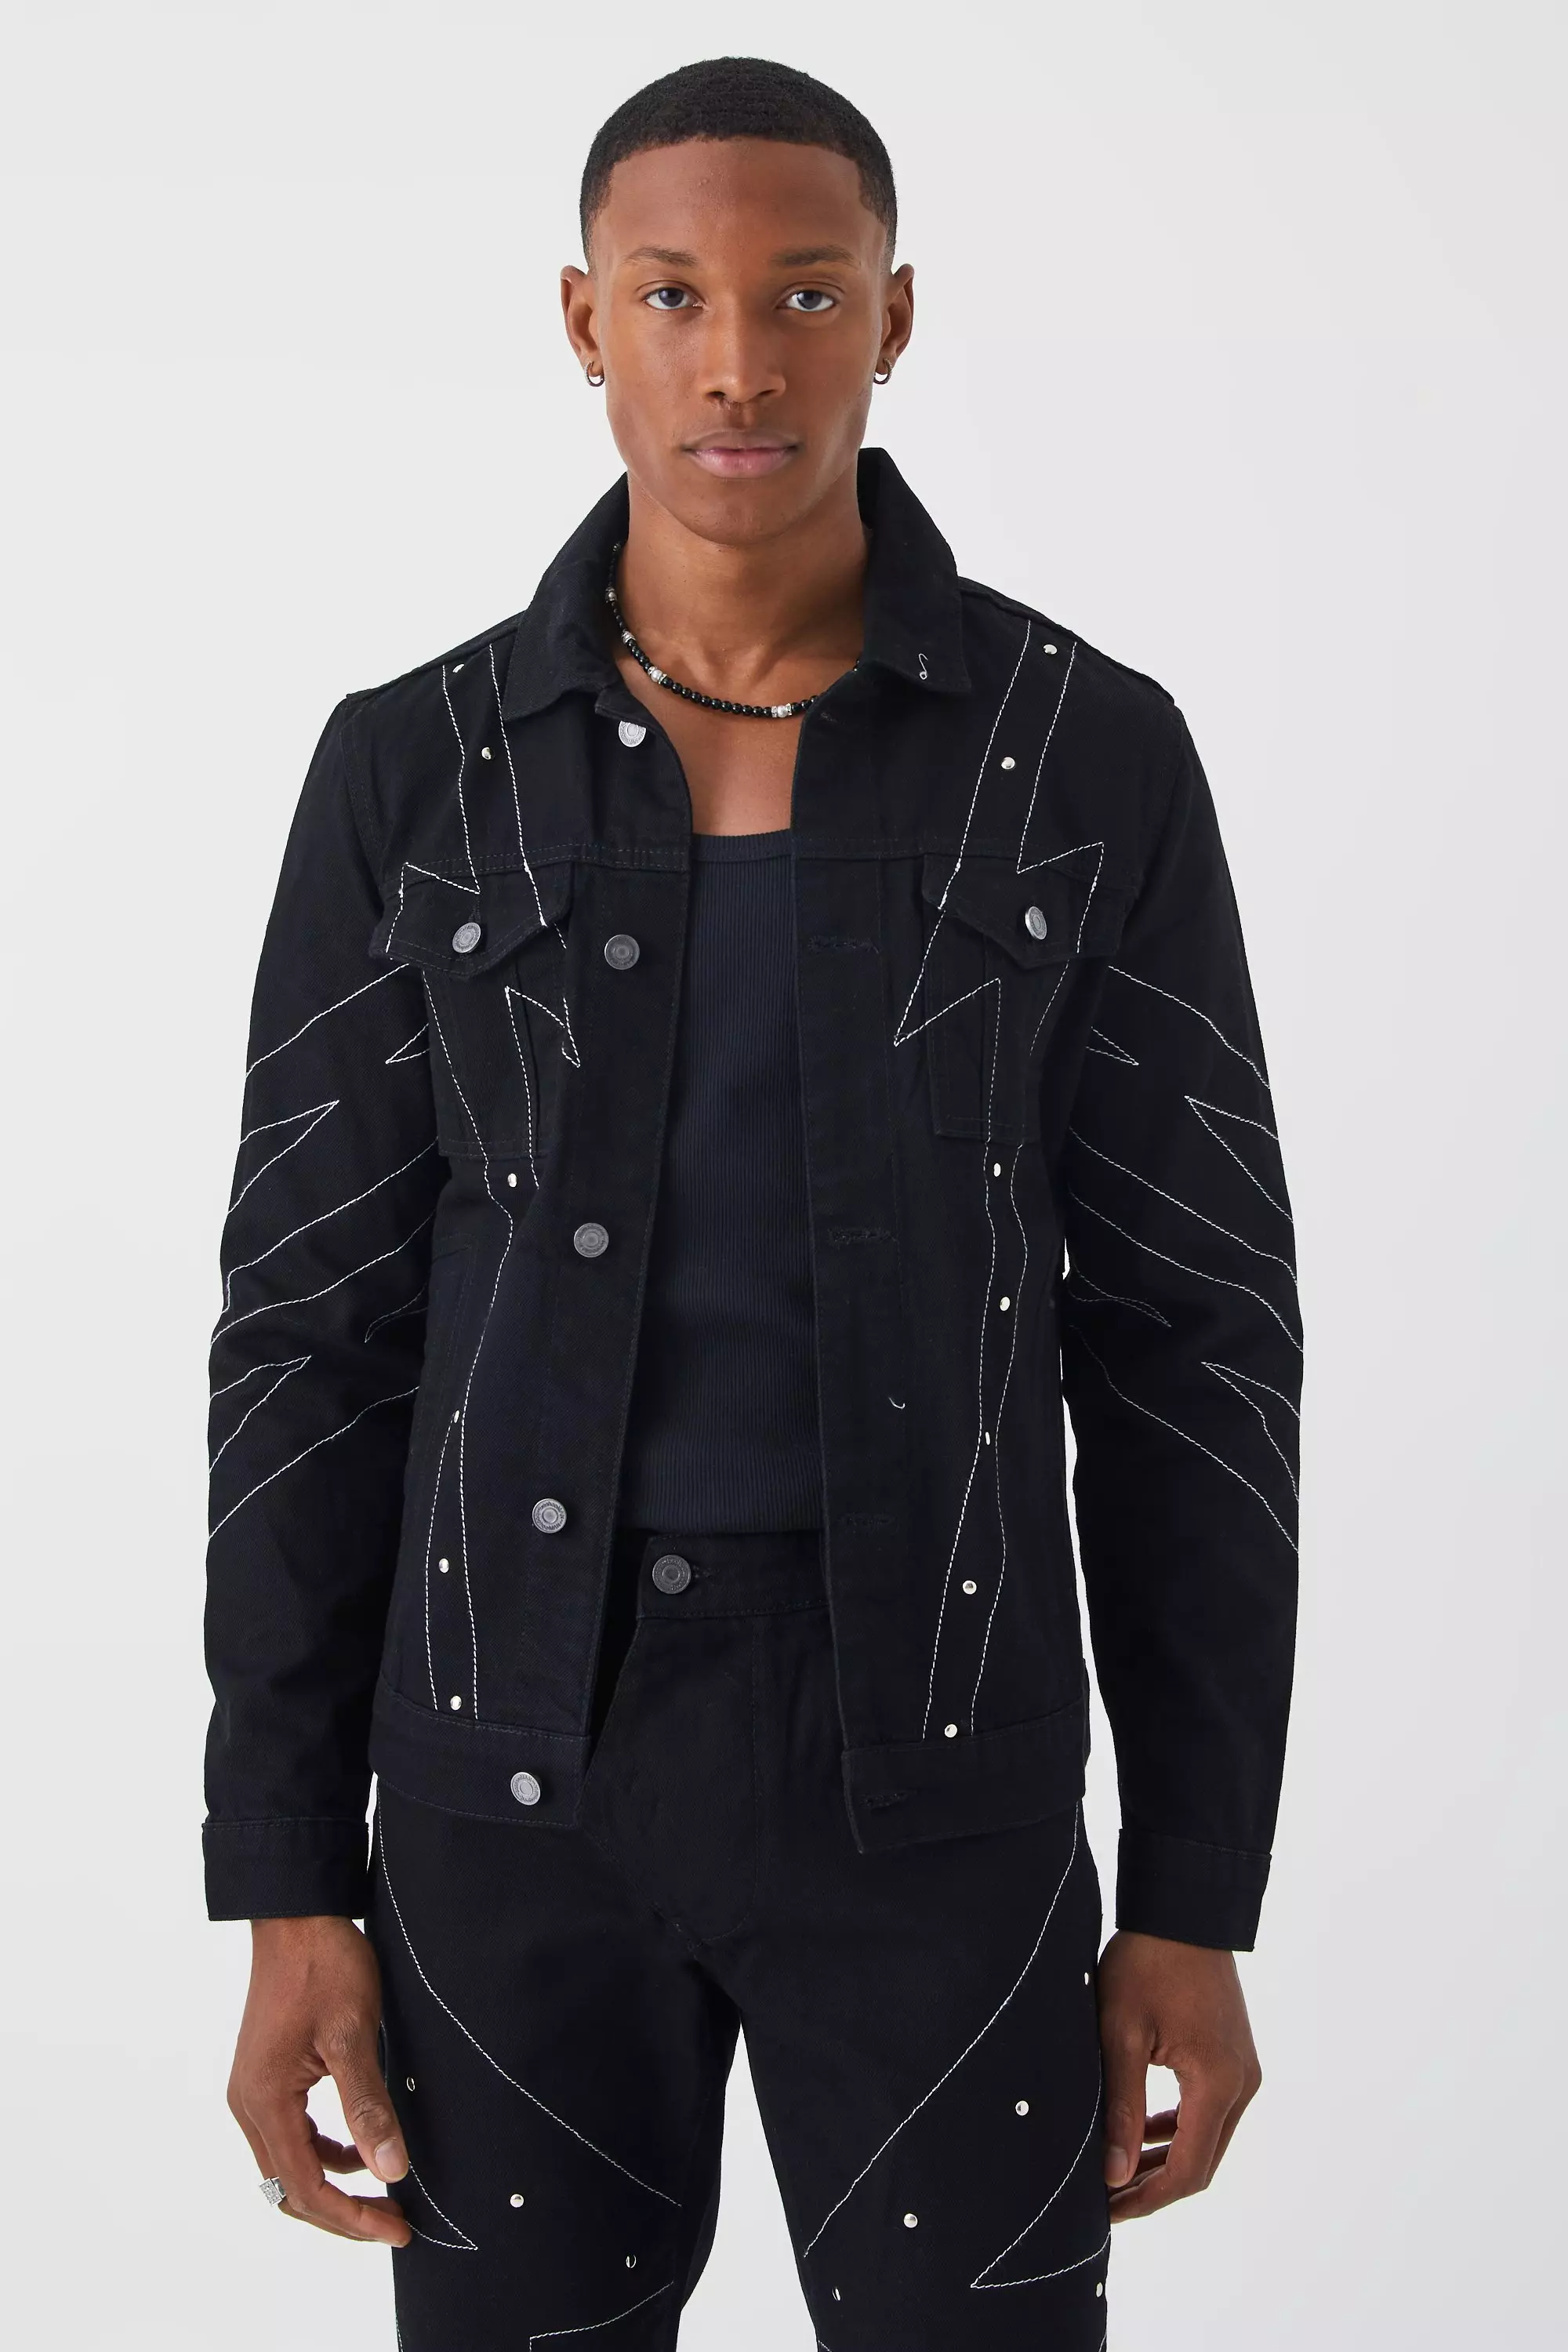 Studded Jean Jackets With Contrast Stitch True black